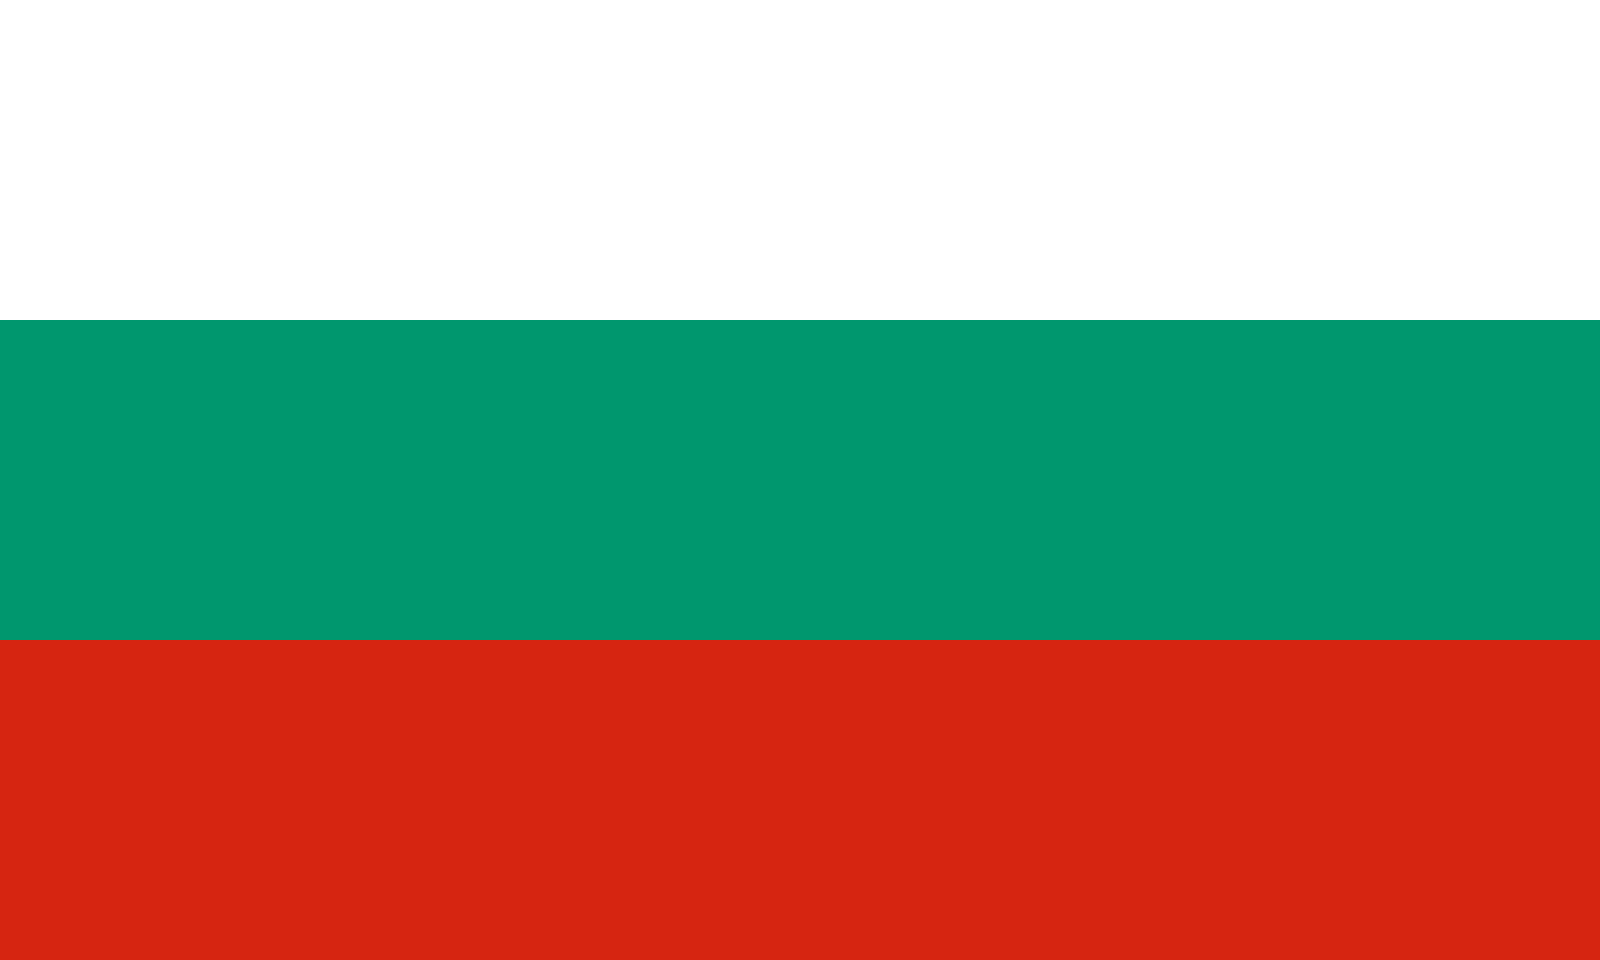 BULGARIA FLAG - NEW 5 x 3 FT - LARGE BULGARIAN